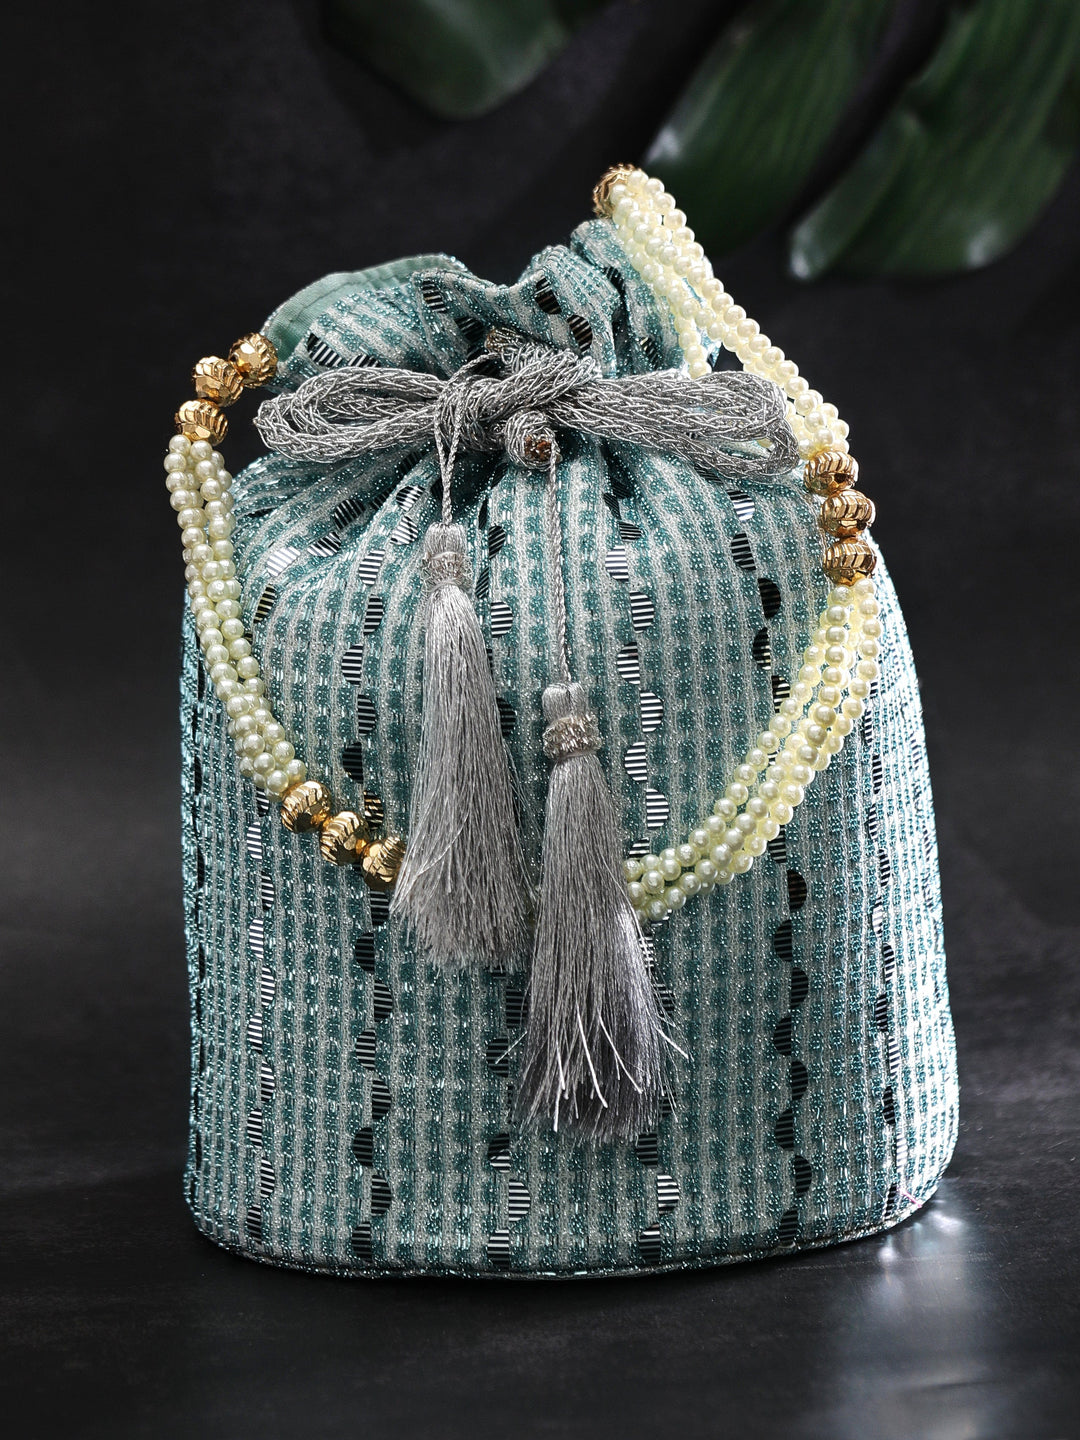 Rubans Sky Blue Coloured Potli Bag With Golden Embroidery Design Handbag & Wallet Accessories